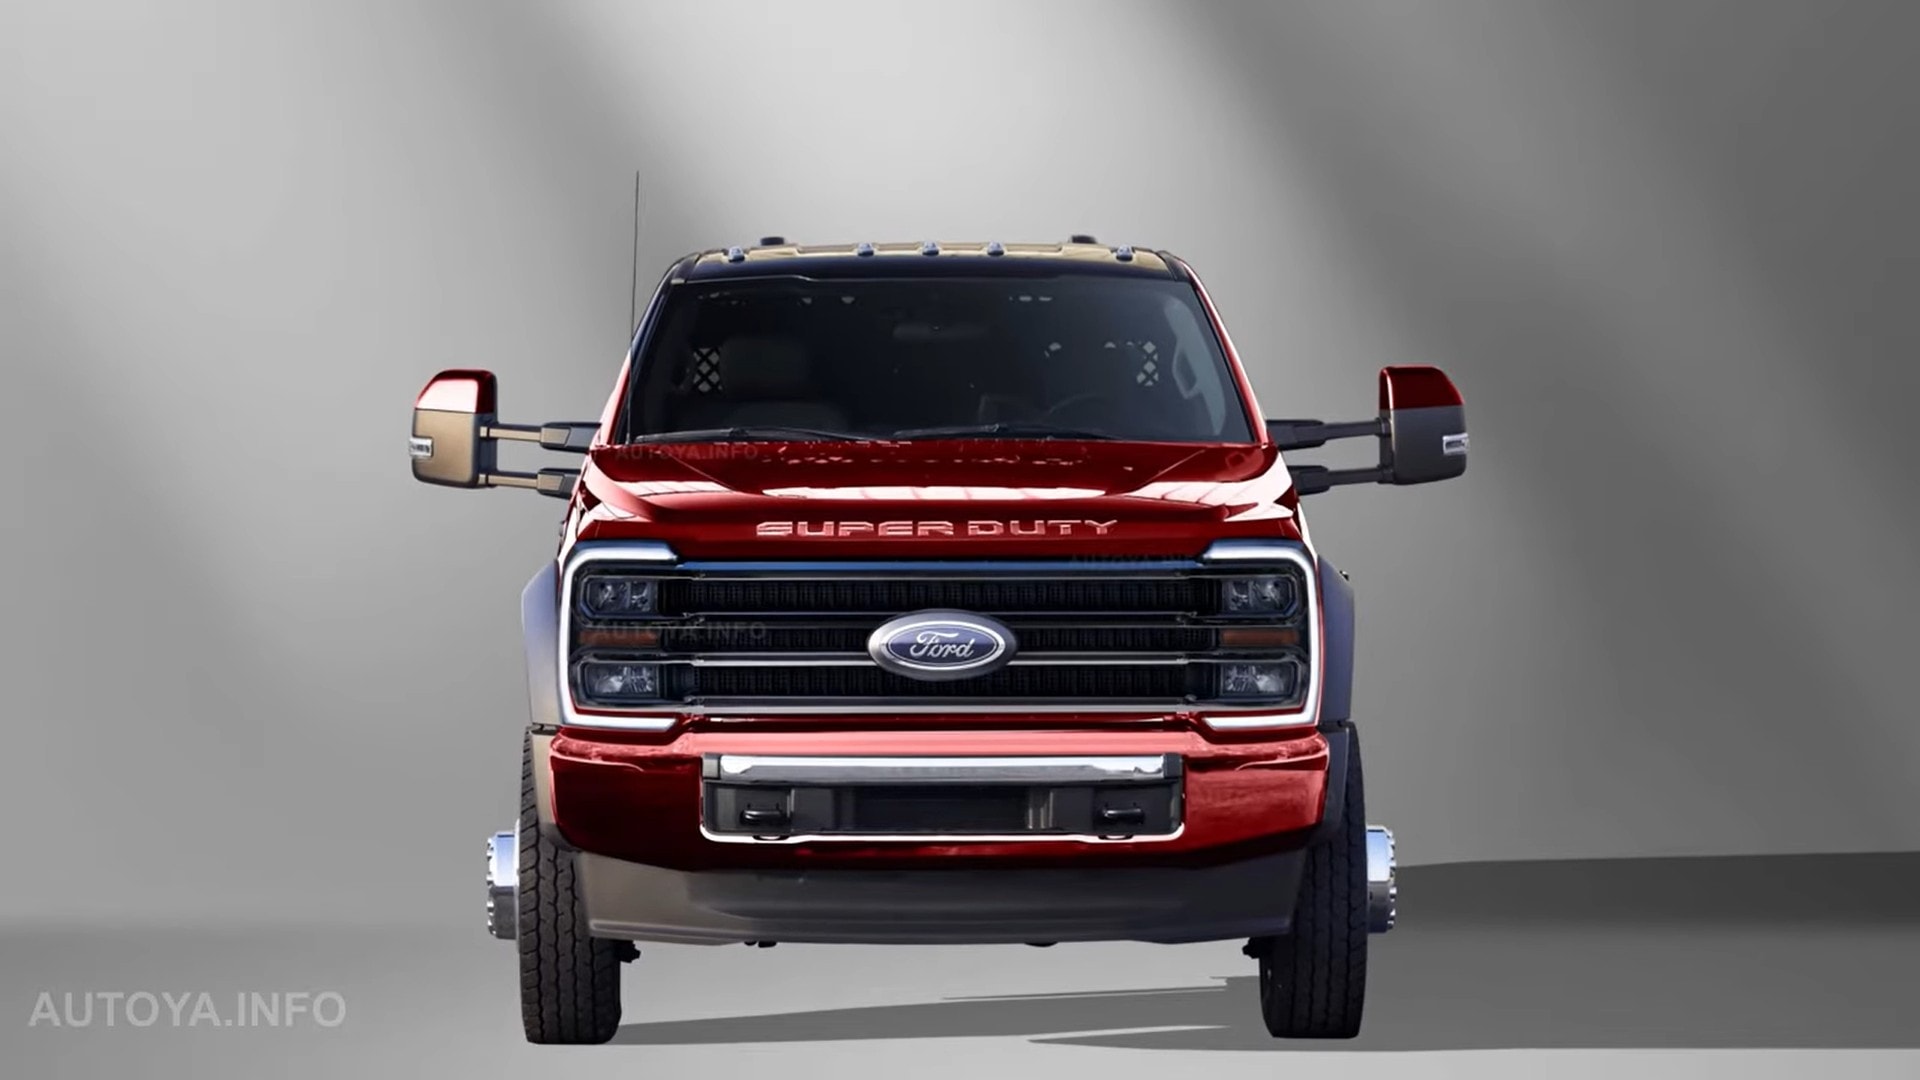 NextGen Ford FSeries Super Duty Gets a Final Digital Preview Ahead of